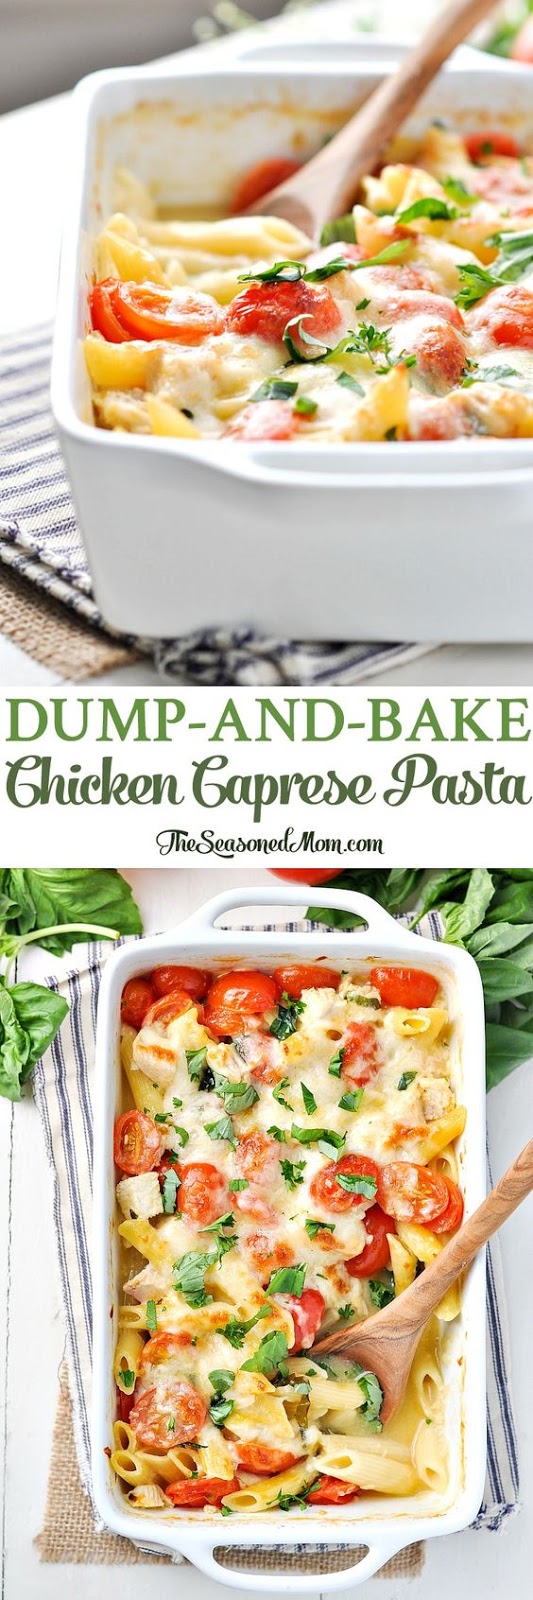 Dump-and-Bake Chicken Caprese Pasta